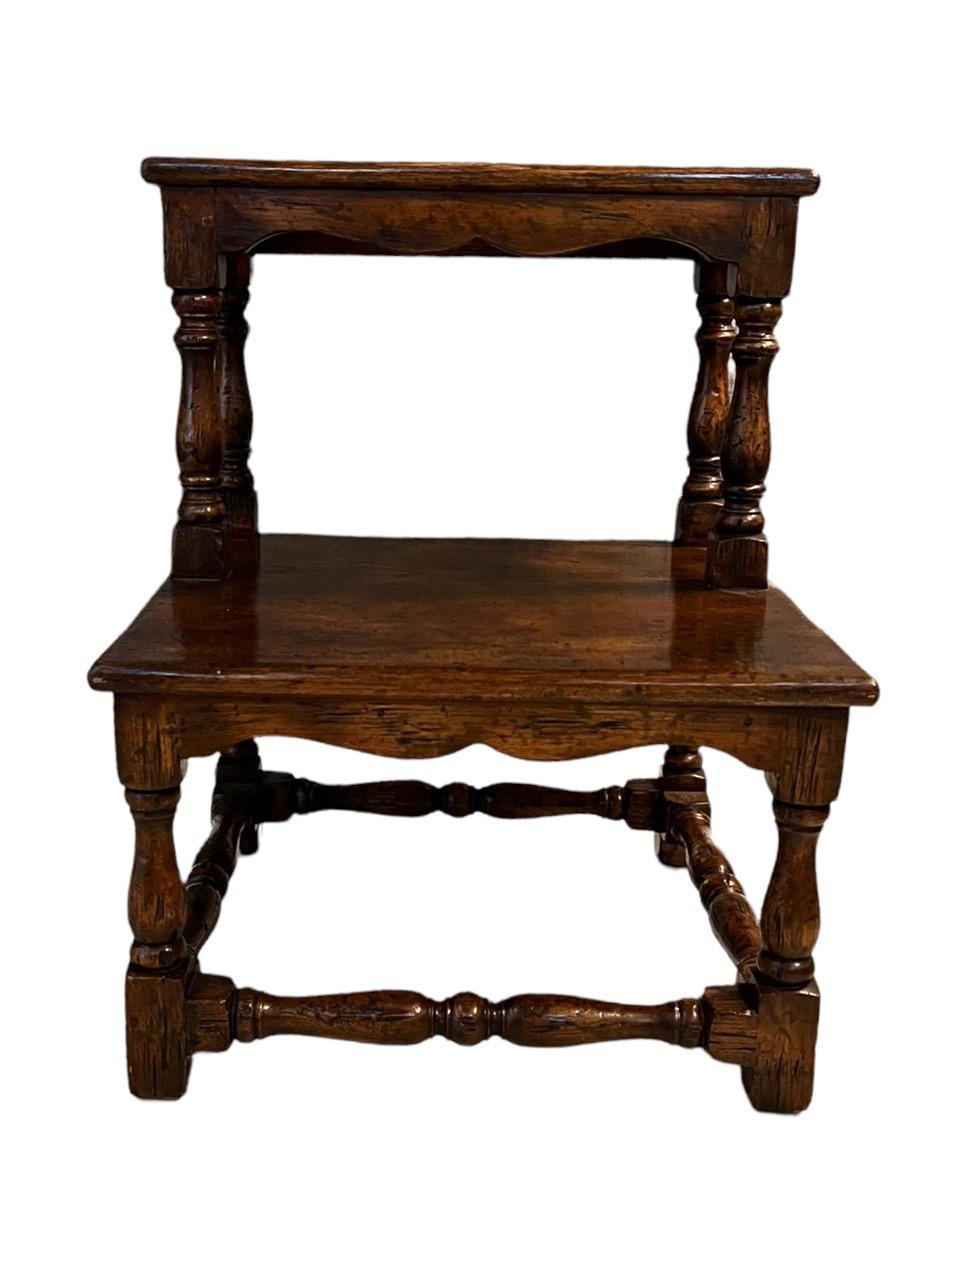 Early 20th century English oak step stool.